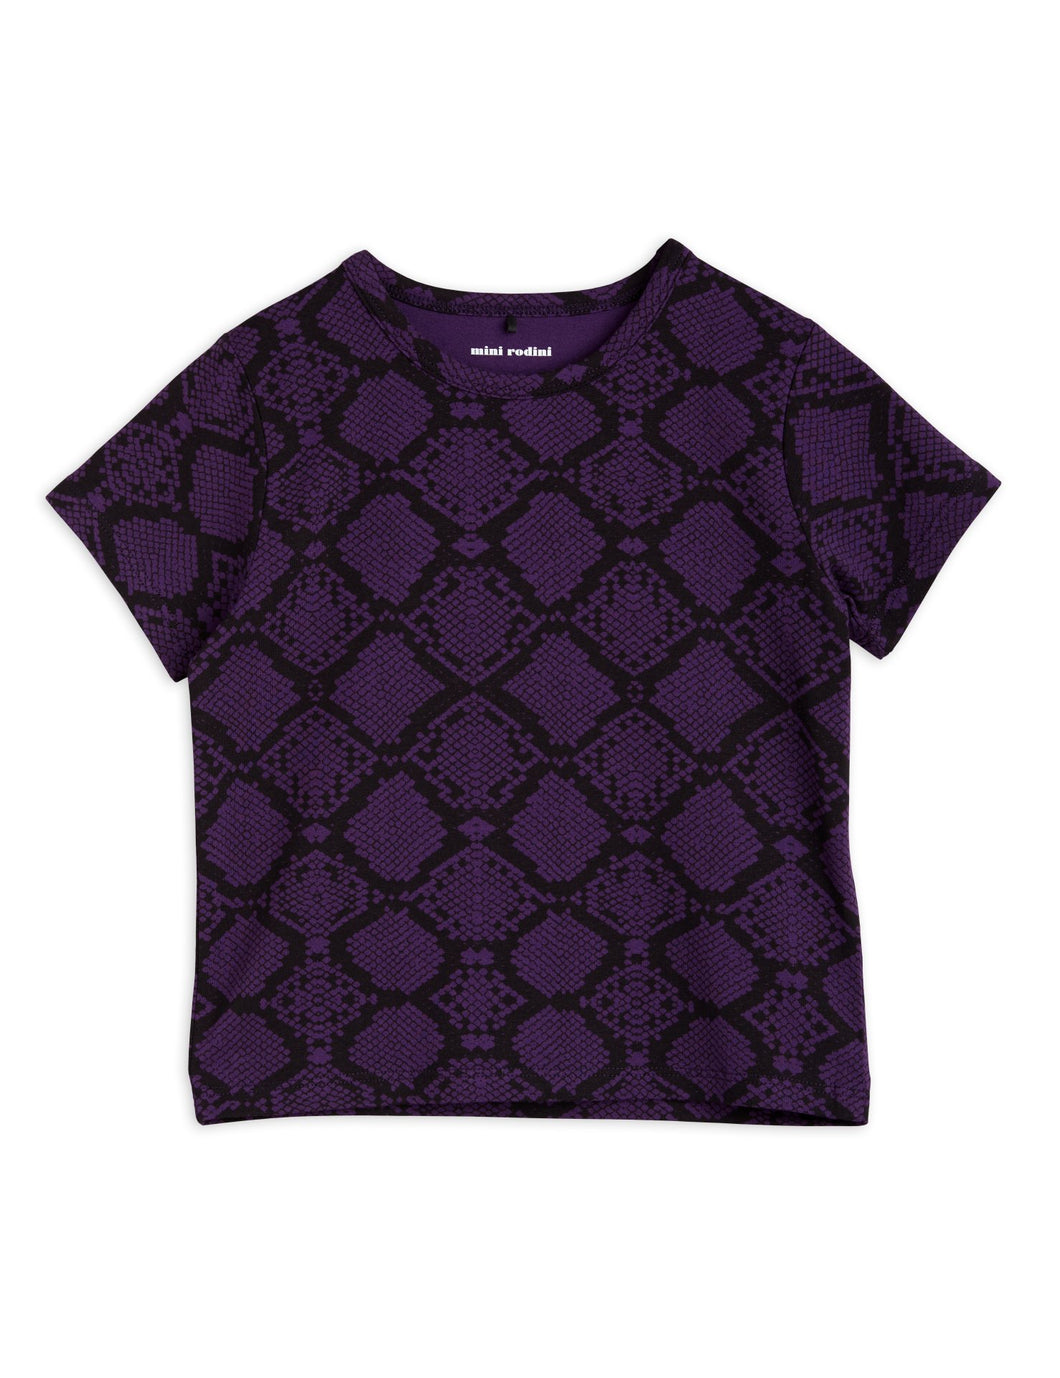 Snakeskin T-Shirt - Purple